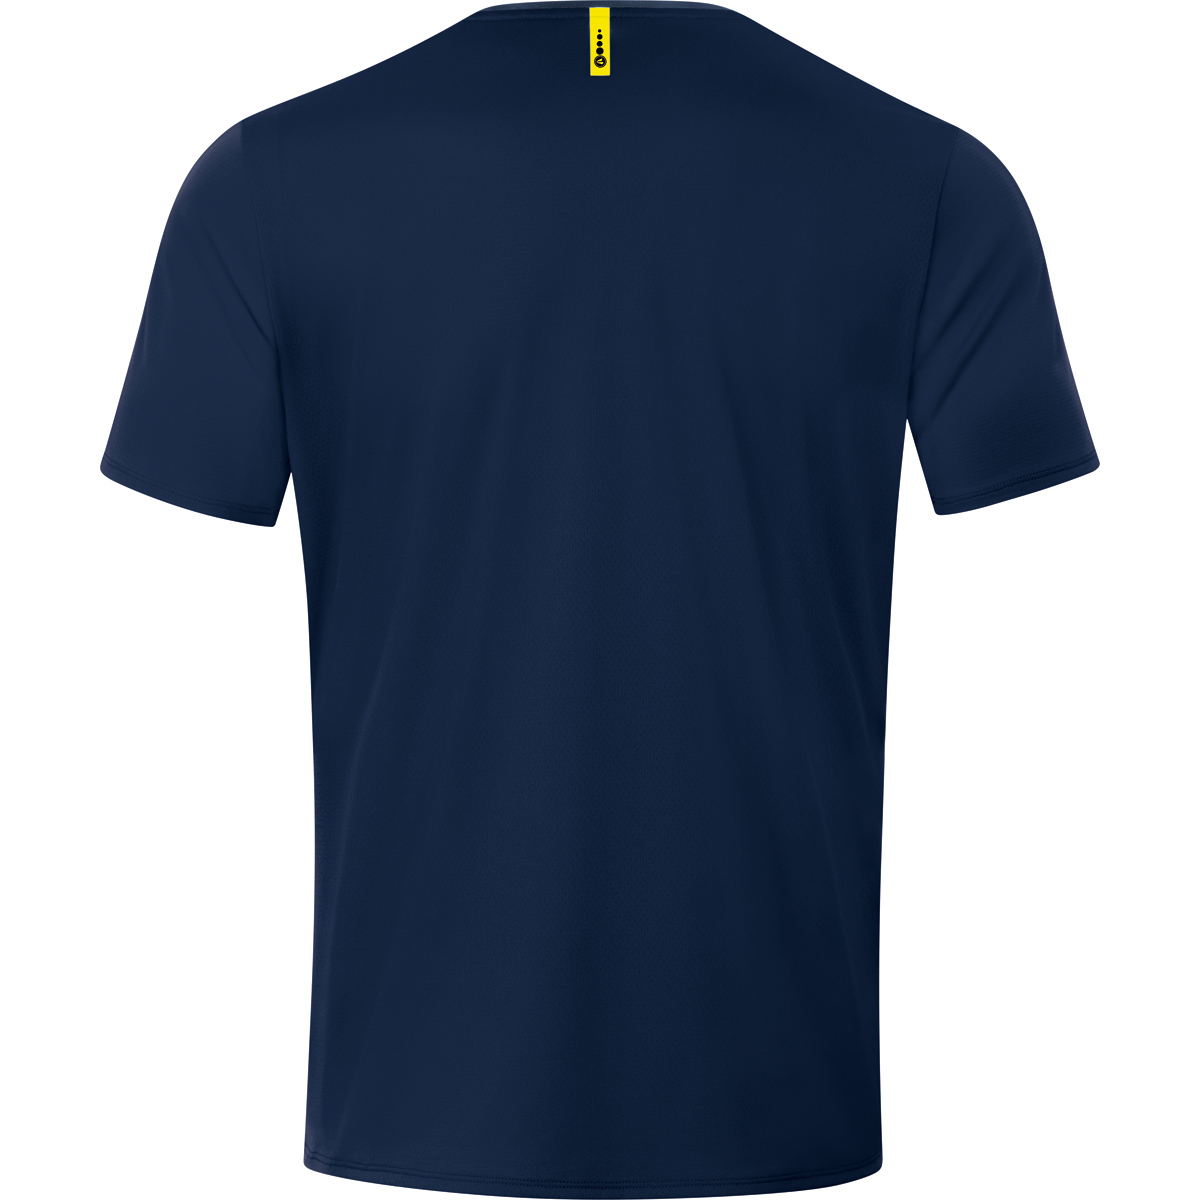 JAKO T-Shirt Herren, Champ 6120 2.0 Gr. marine/darkblue/neongelb, M